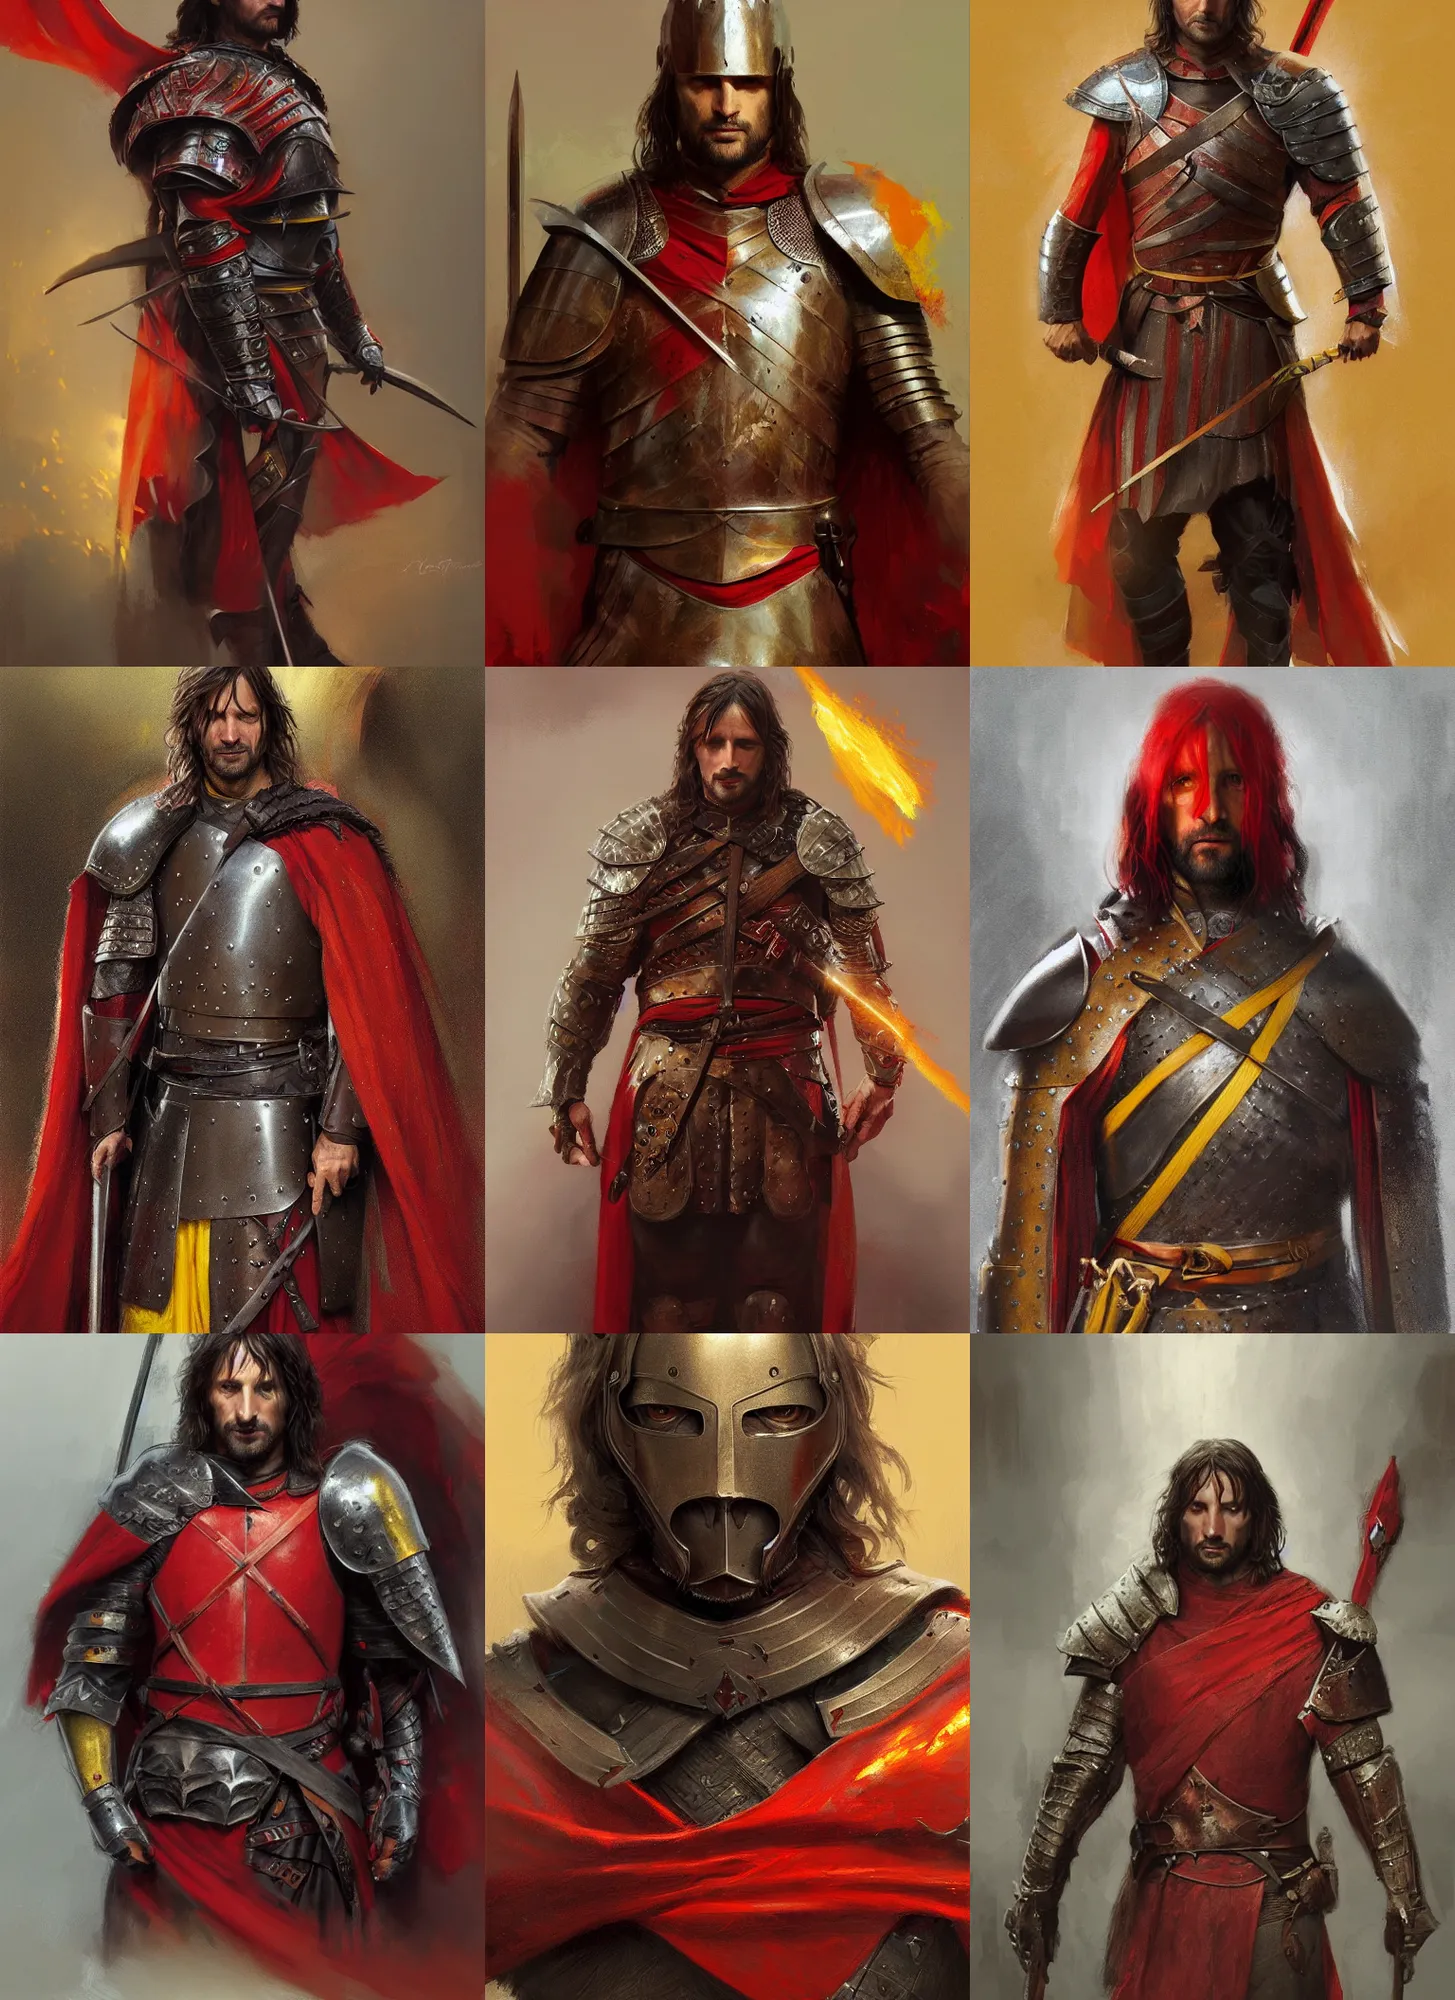 Prompt: aragorn portrait medieval armor, dark, red yellow flag, intricate, highly detailed, smooth, artstation, digital illustration, ruan jia, mandy jurgens, rutkowski